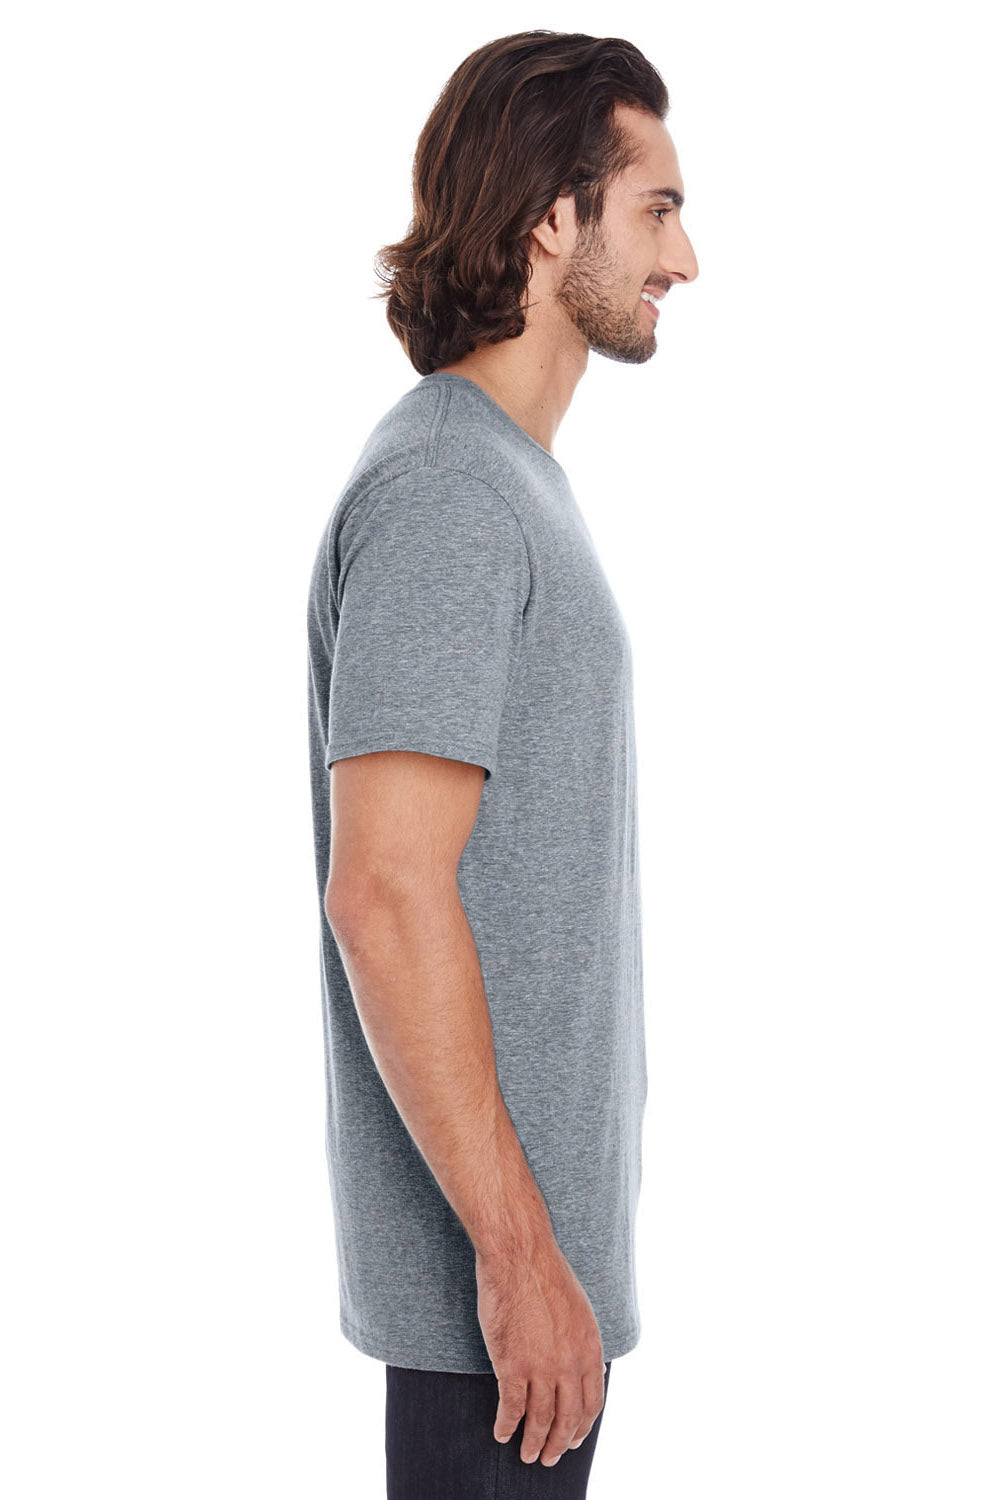 Anvil 980 Mens Short Sleeve Crewneck T-Shirt Heather Graphite Grey Side